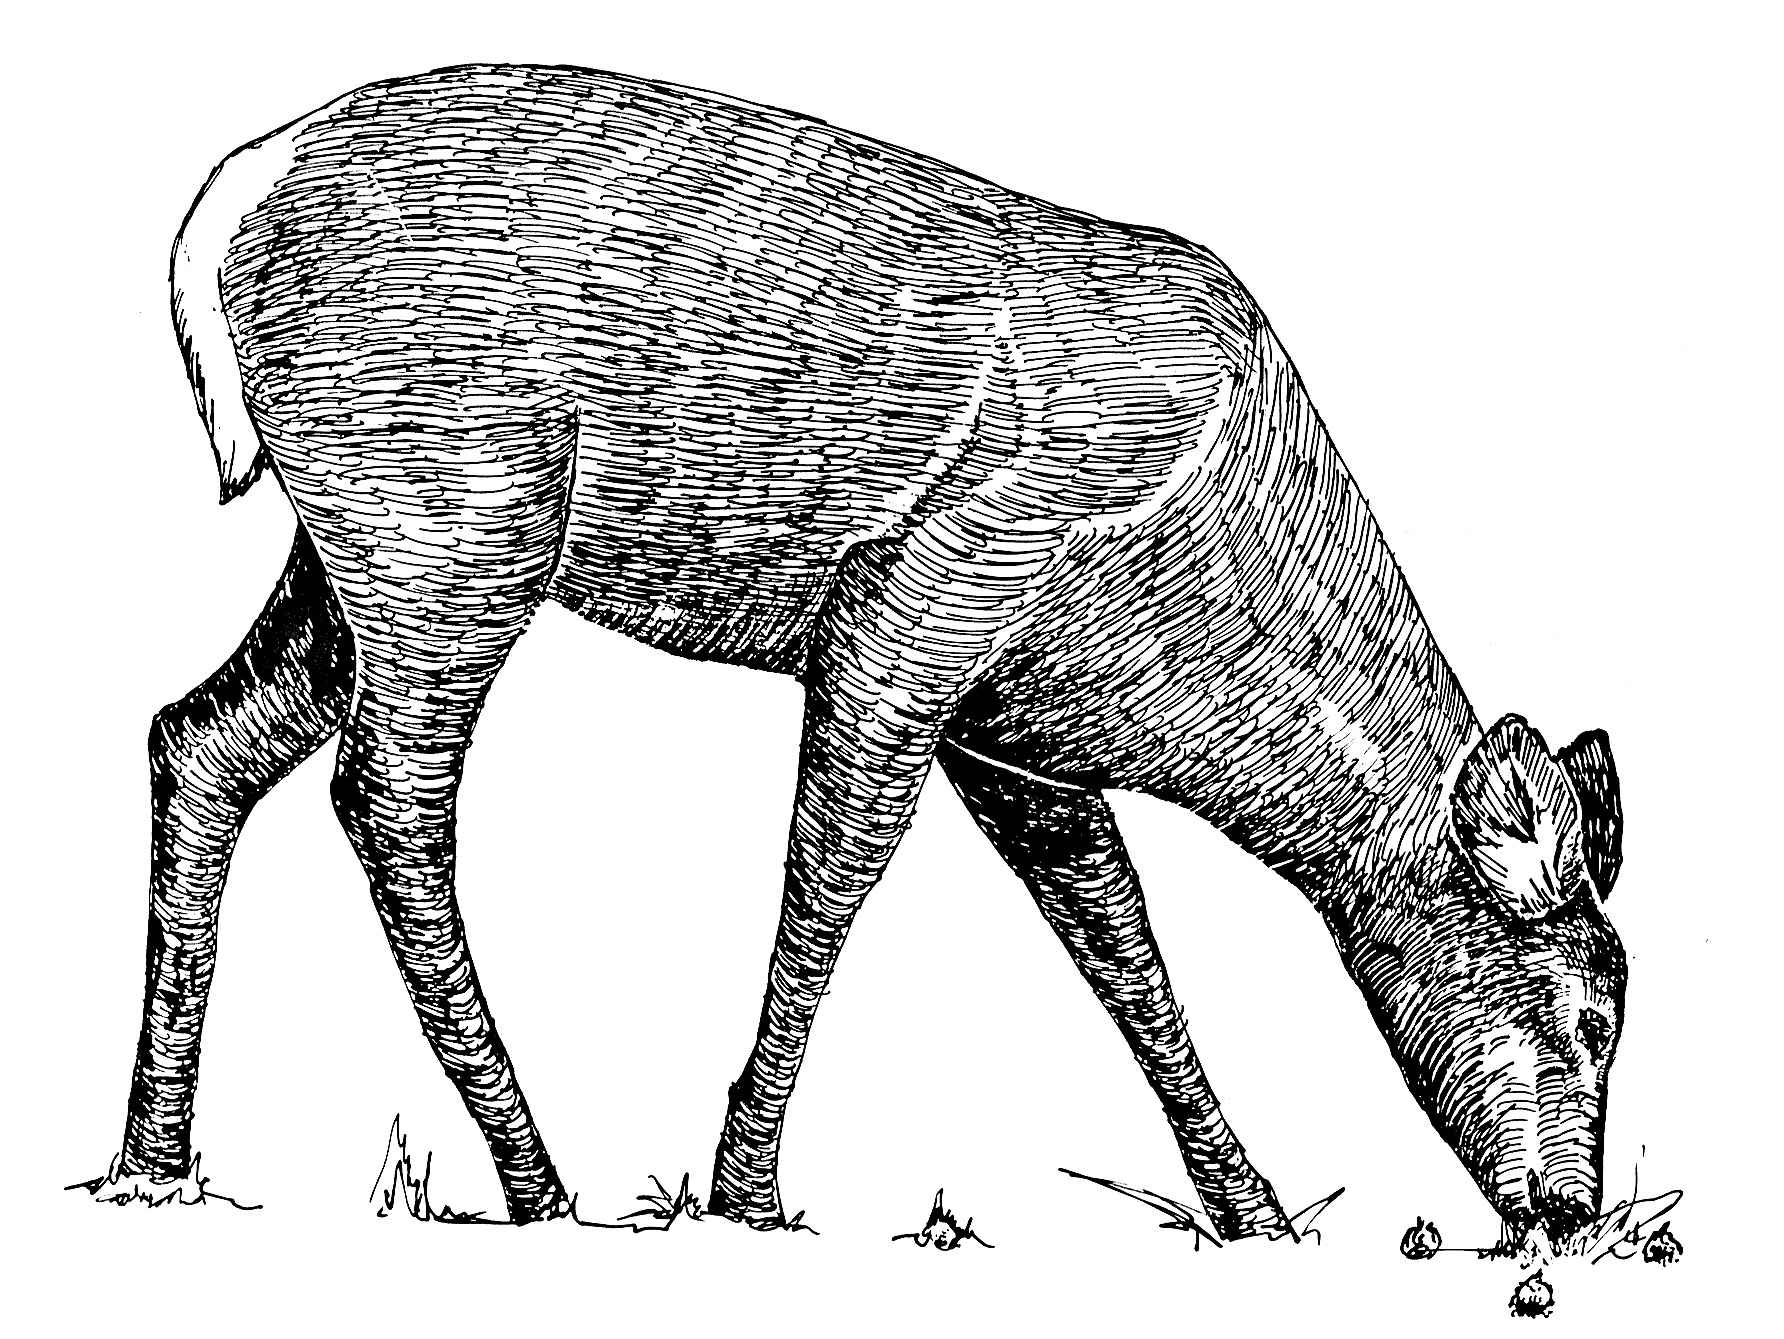 File:Animal line art drawing.jpg - Wikimedia Commons